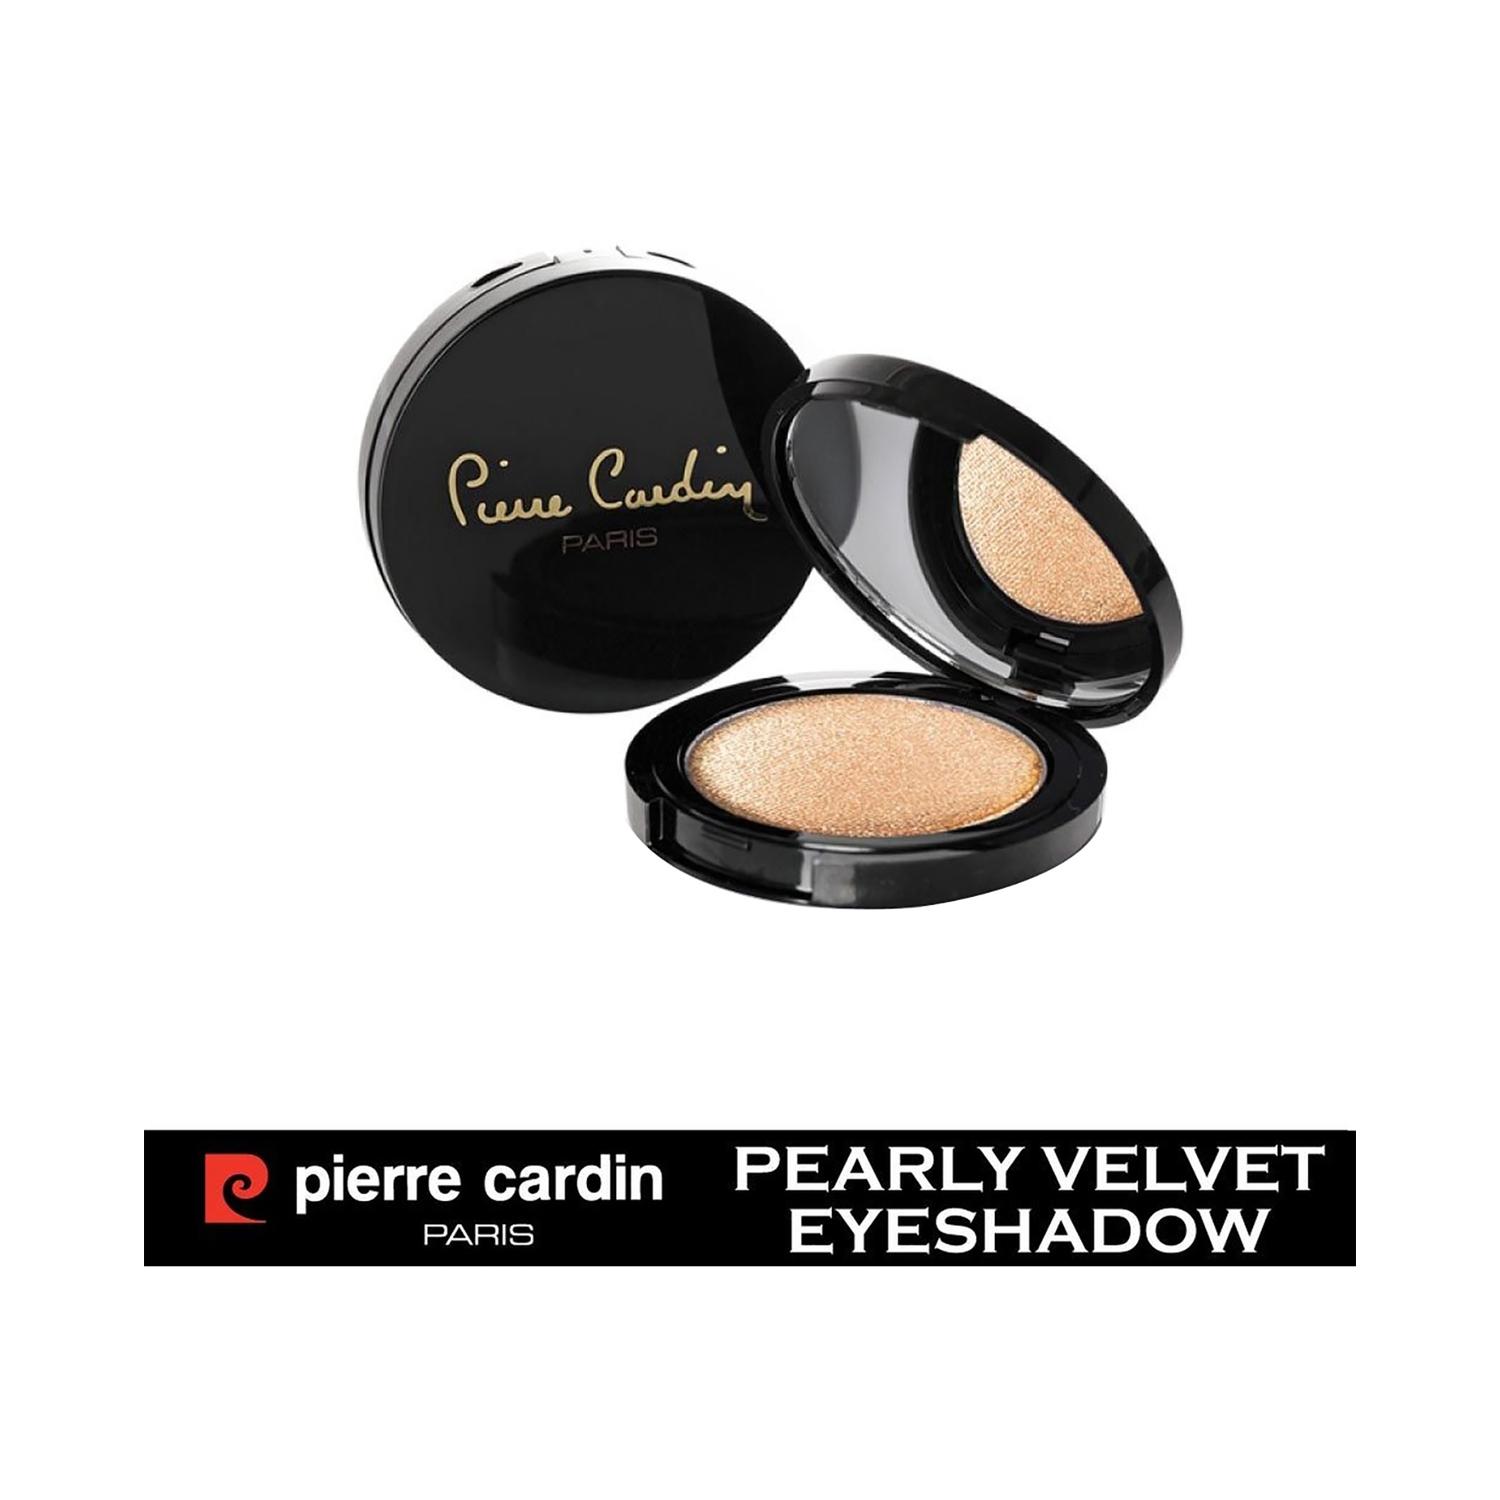 pierre cardin paris pearly velvet eye shadow - 775 gold (4g)